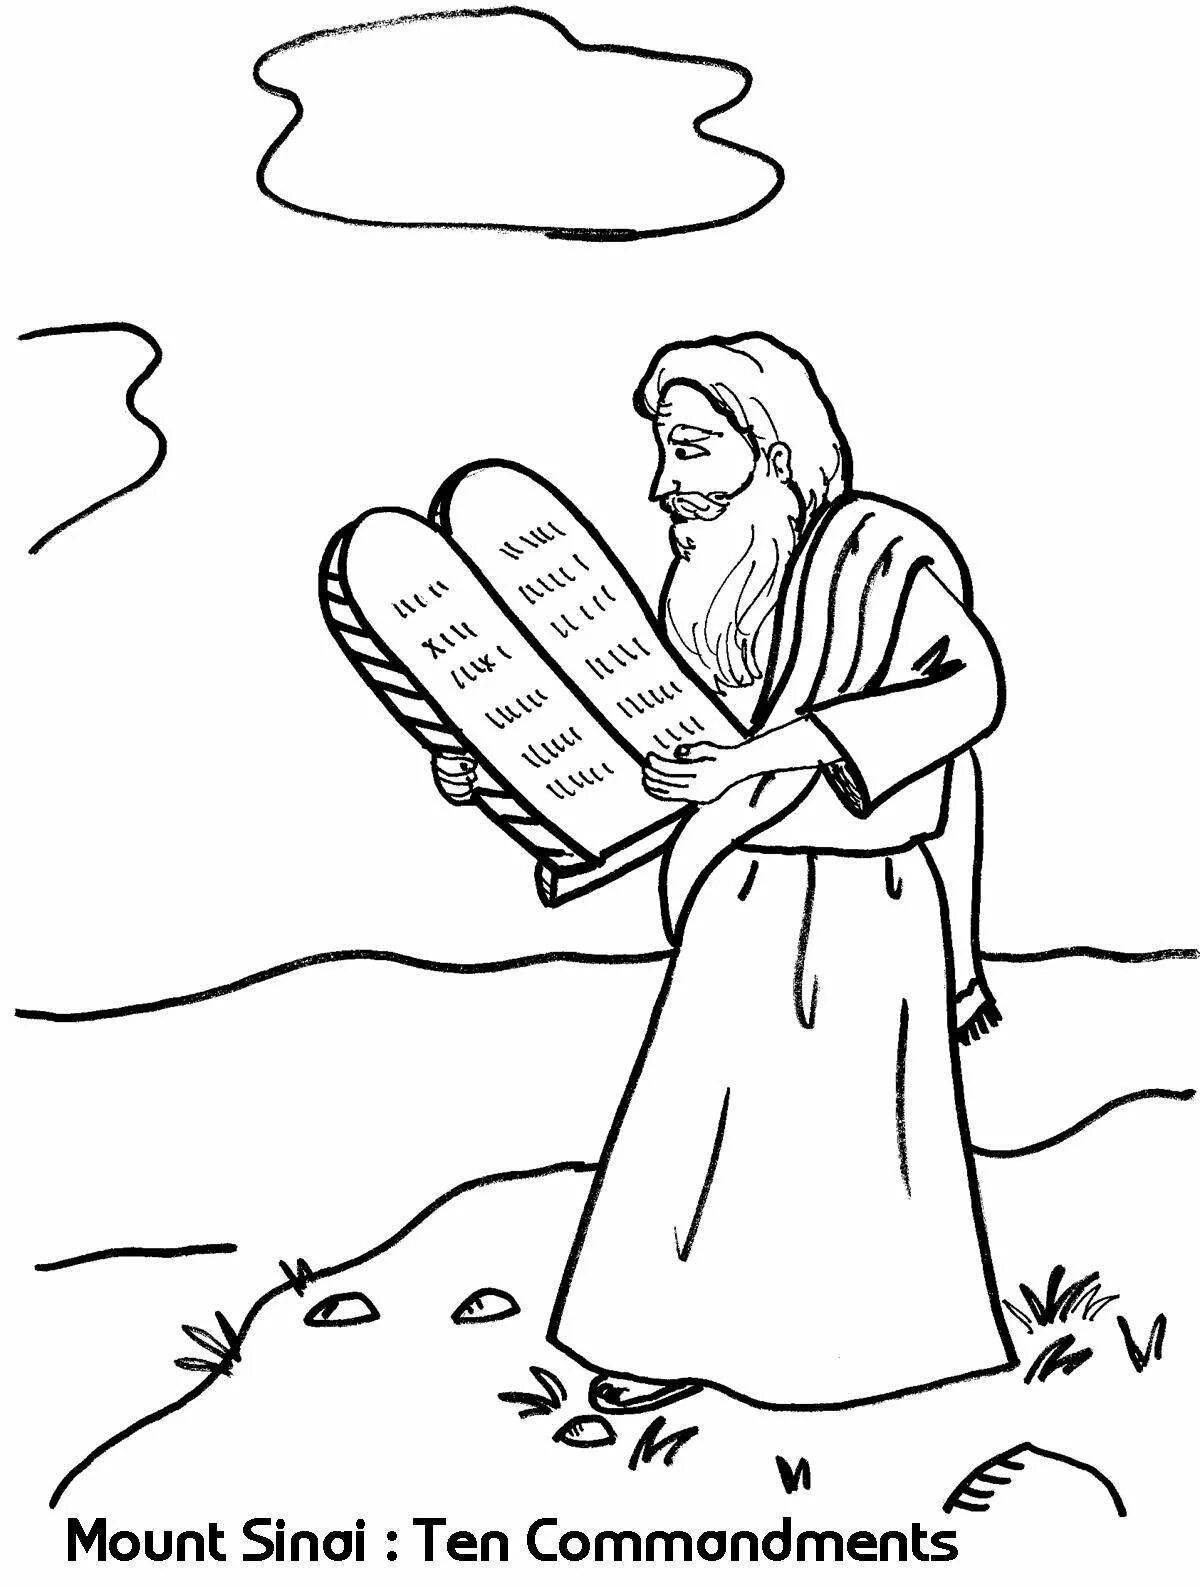 Beautiful 10 commandments coloring page